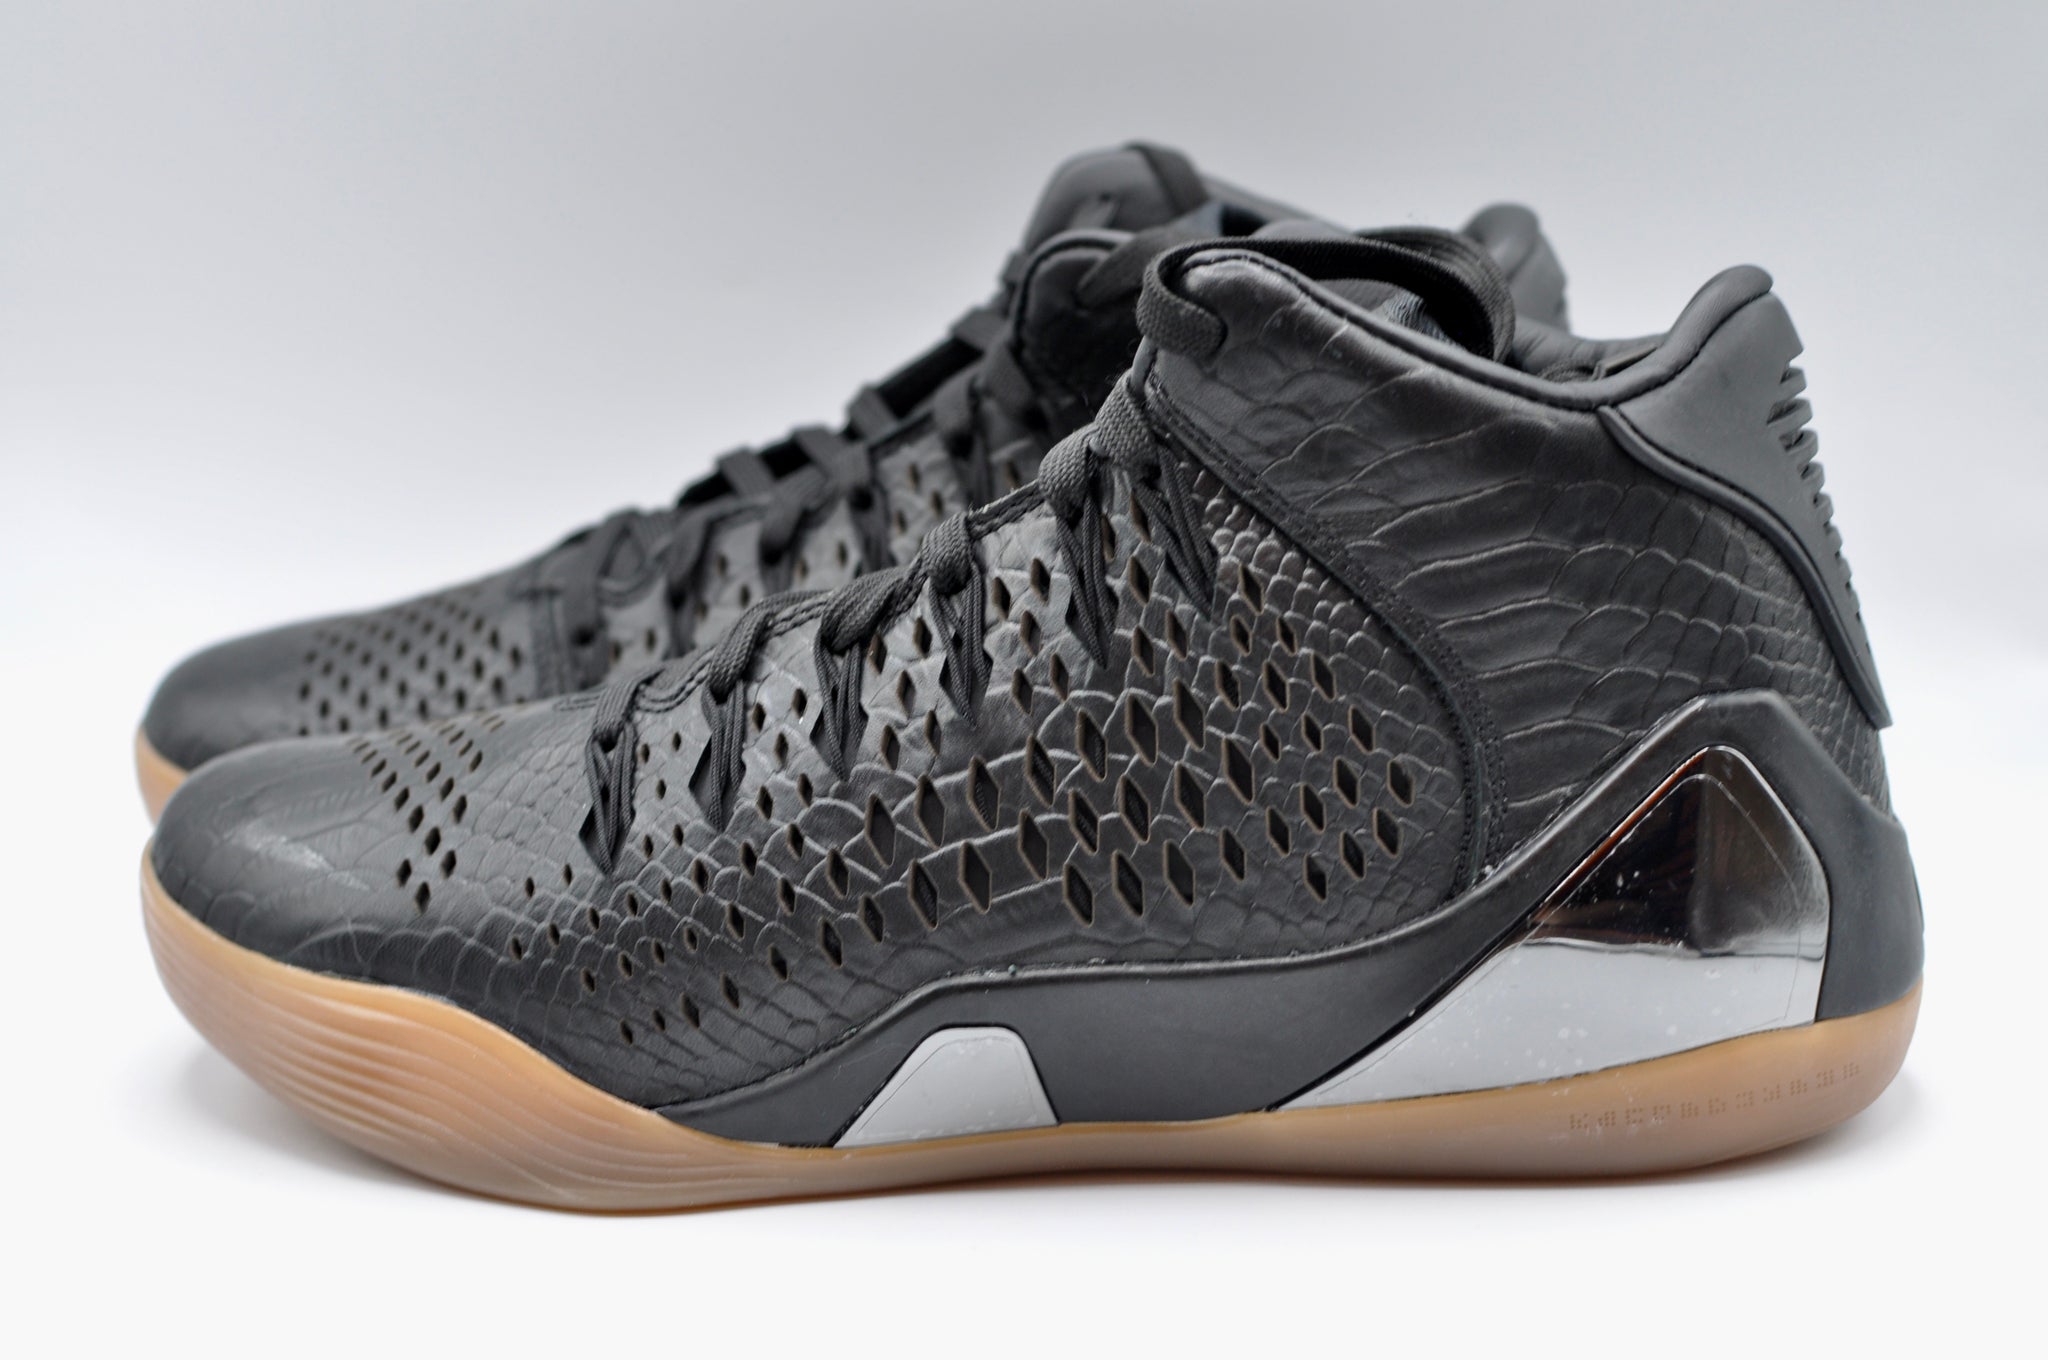 A Closer Look at the Nike Kobe IX High EXT QS Snakeskin